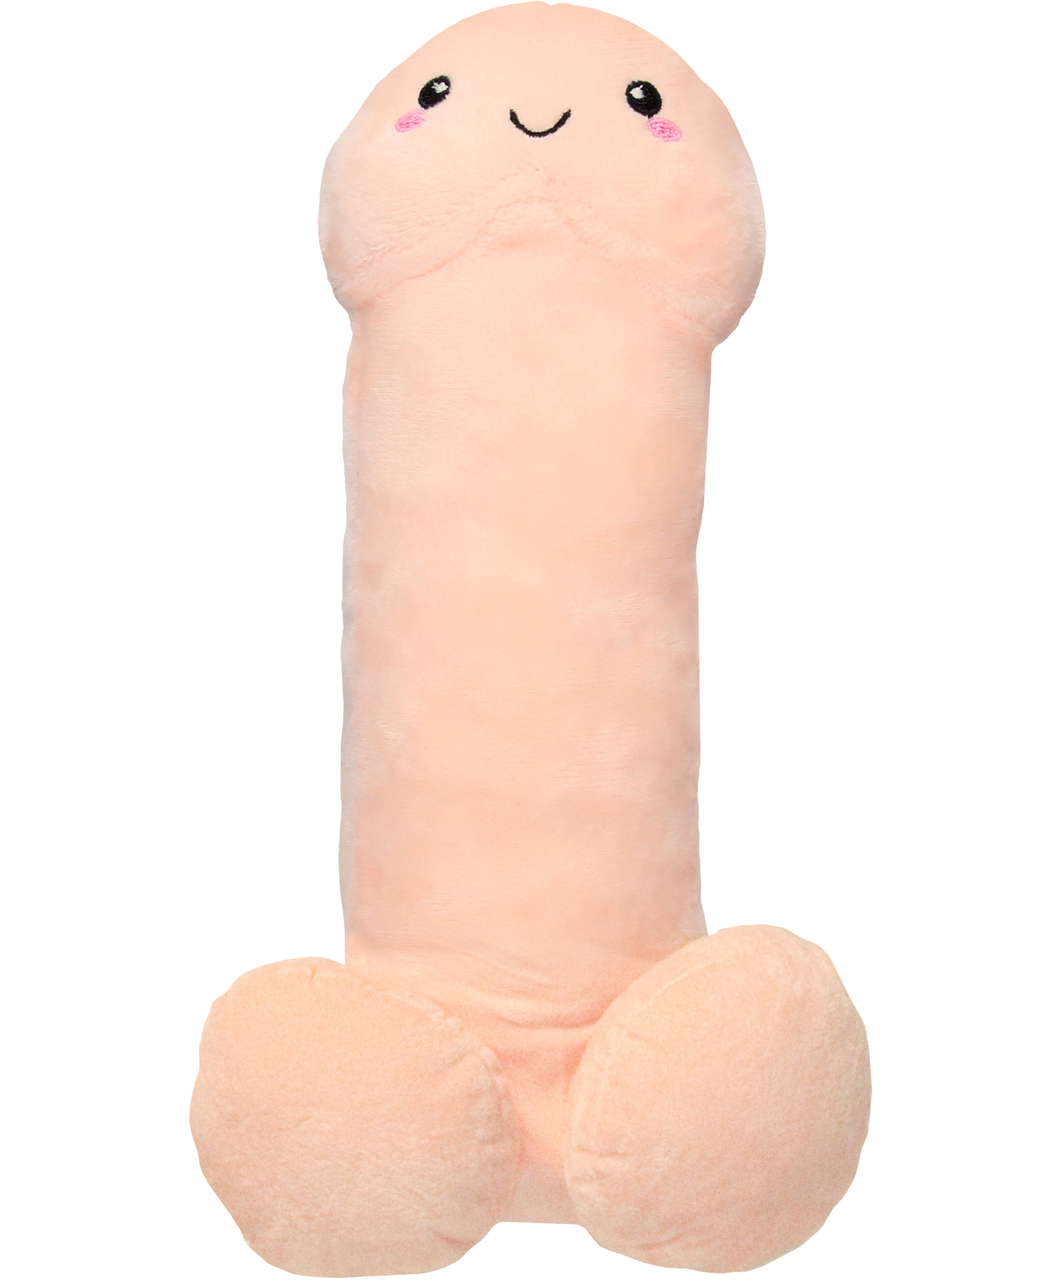 Shots Toys Cute Penis Plushie плюшевая игрушка